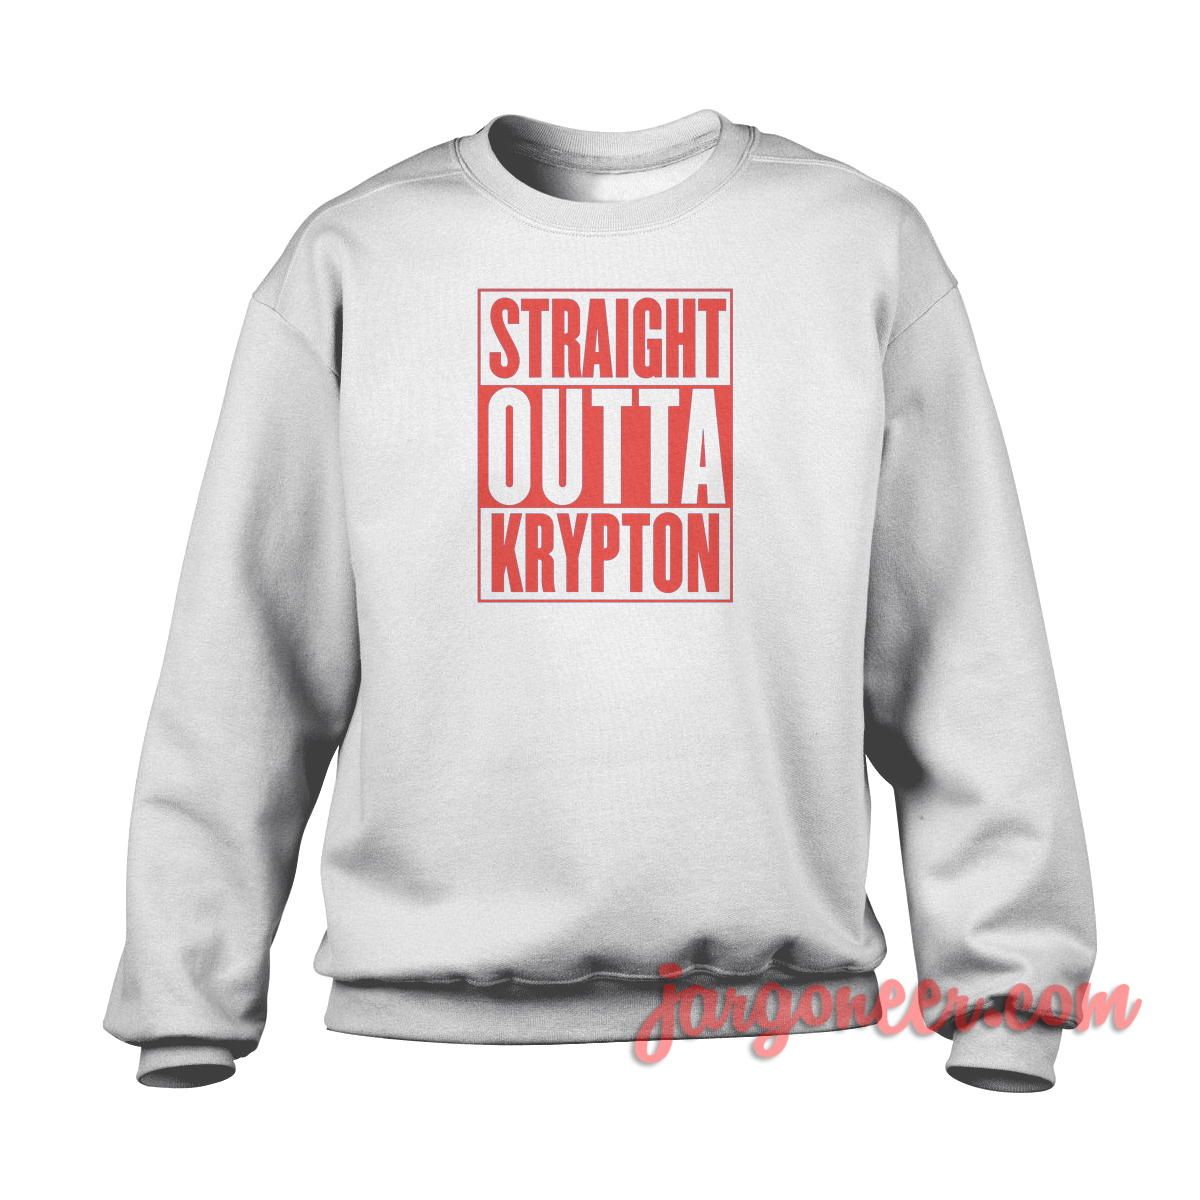 Straight Outta Krypton - Shop Unique Graphic Cool Shirt Designs